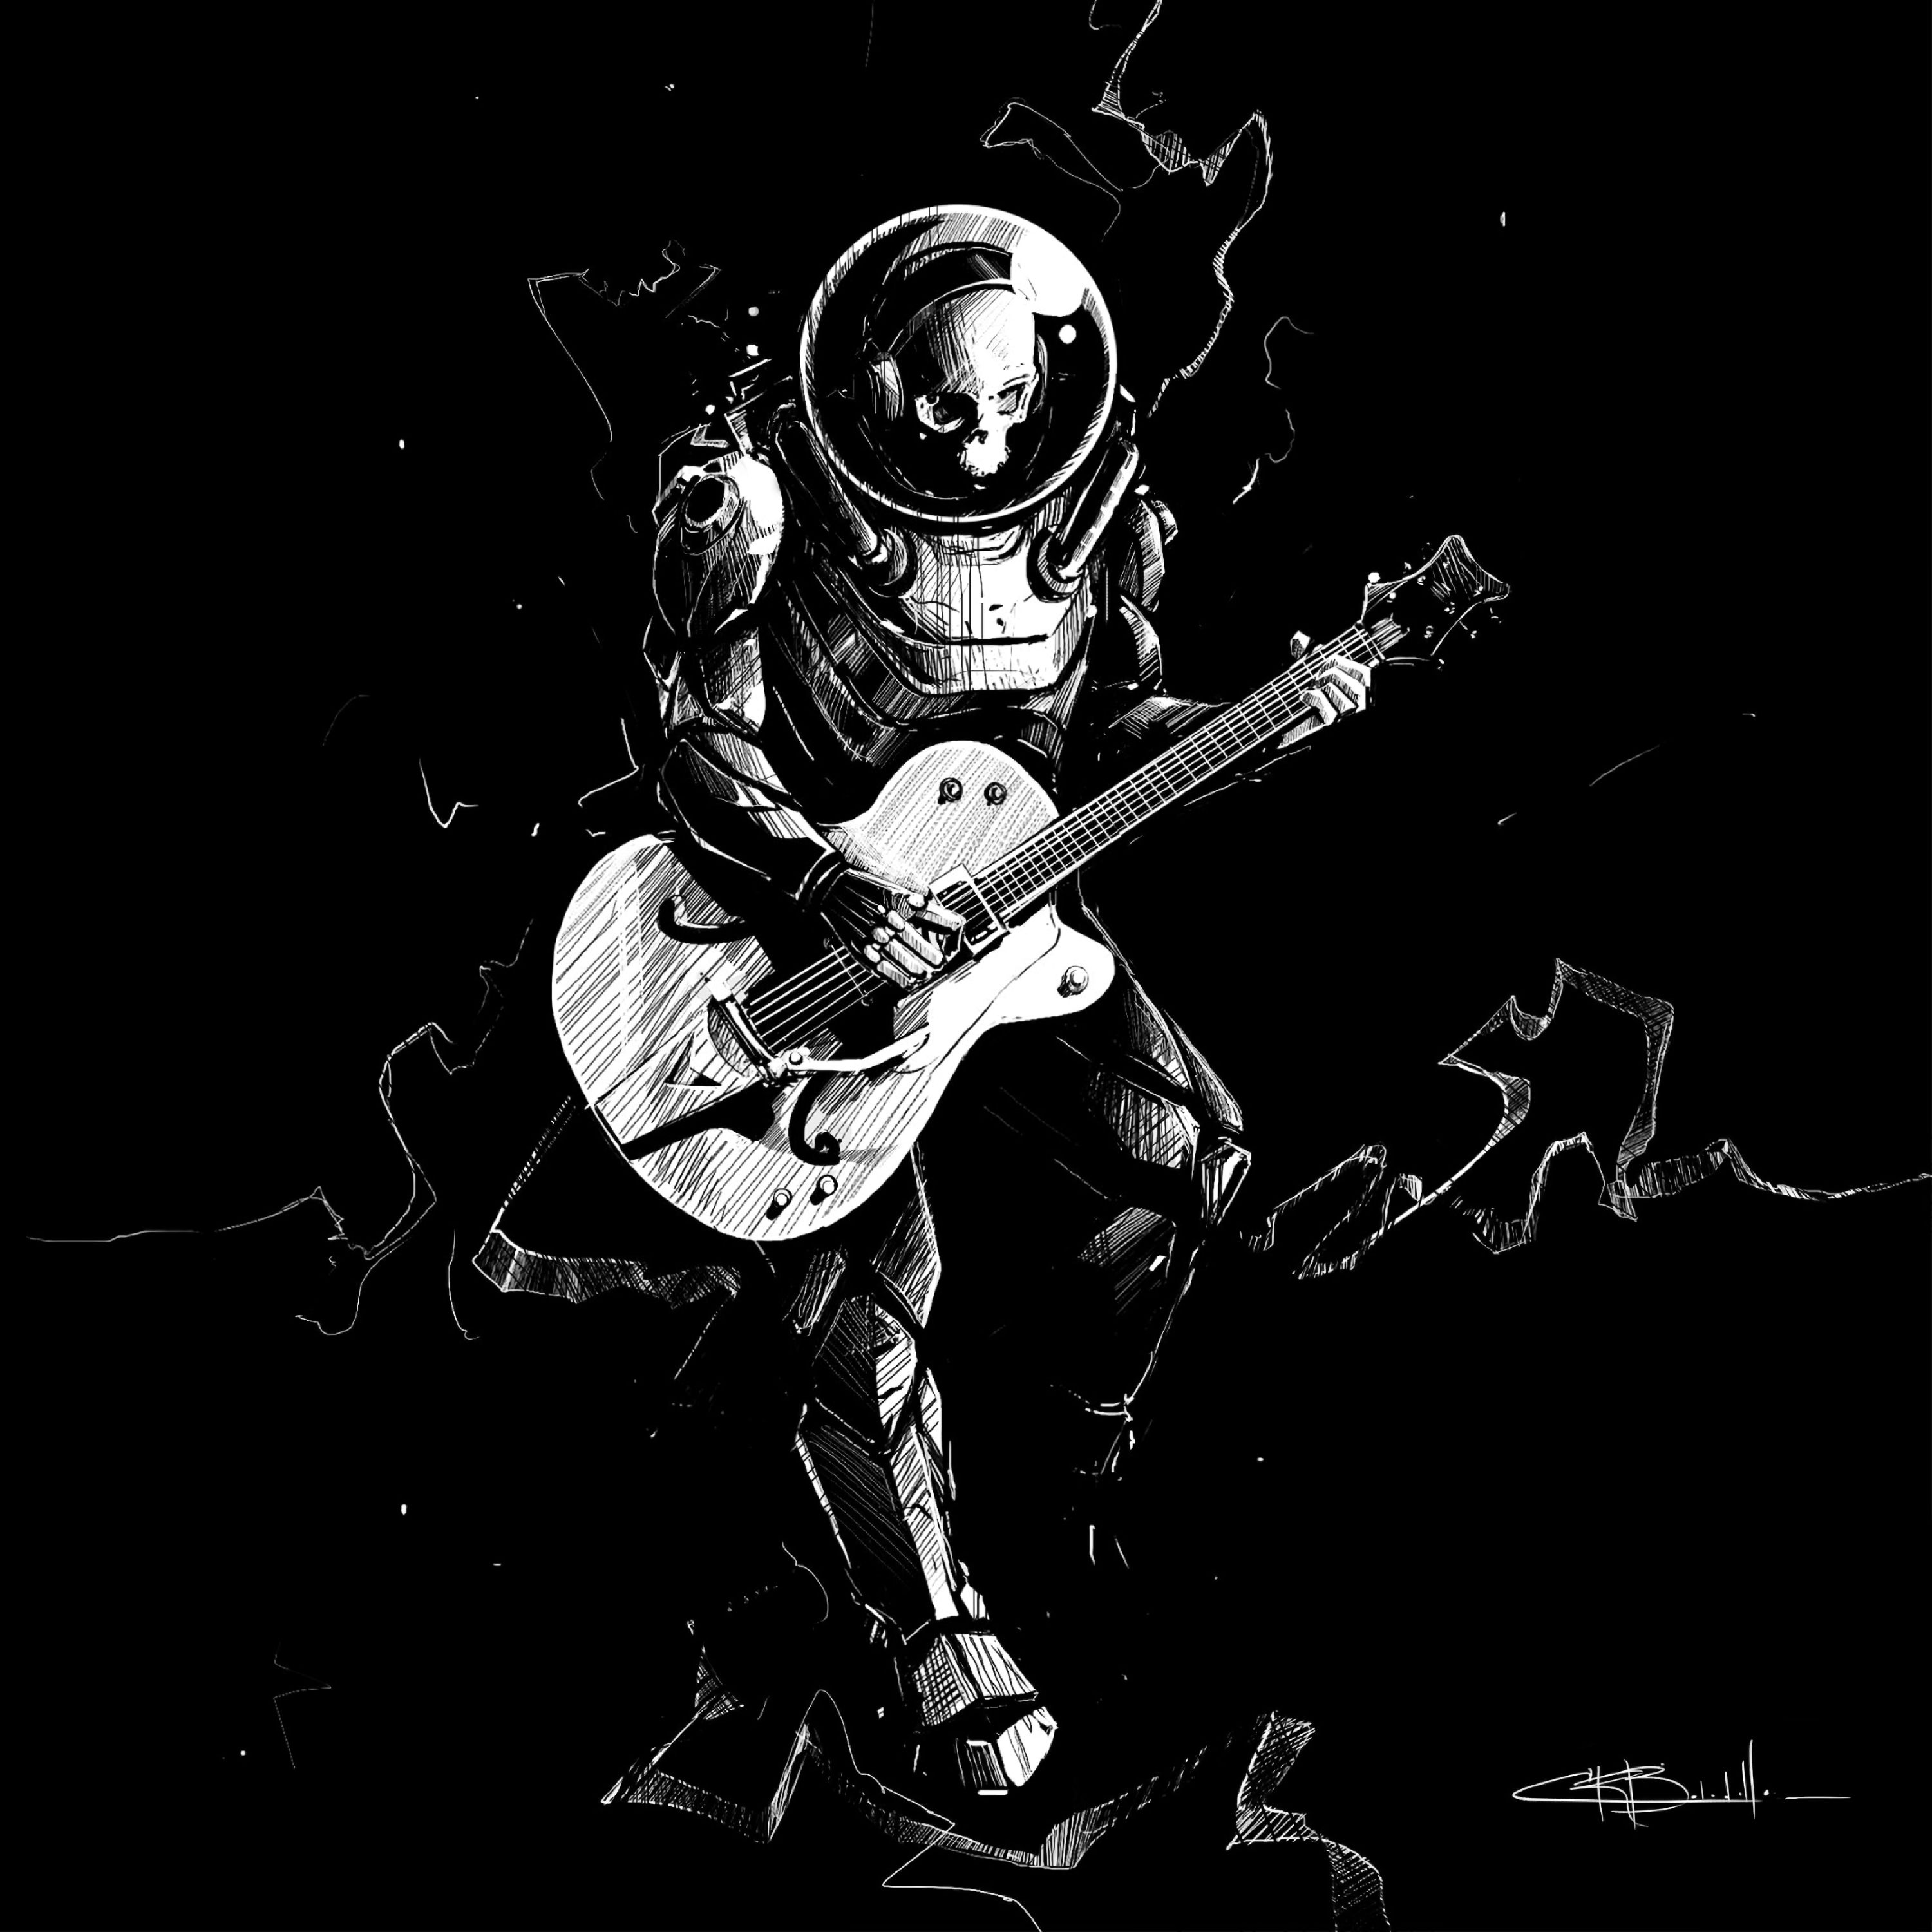 guitar, art, bw, chb, guitar player, guitarist, spacesuit, space suit, skeleton